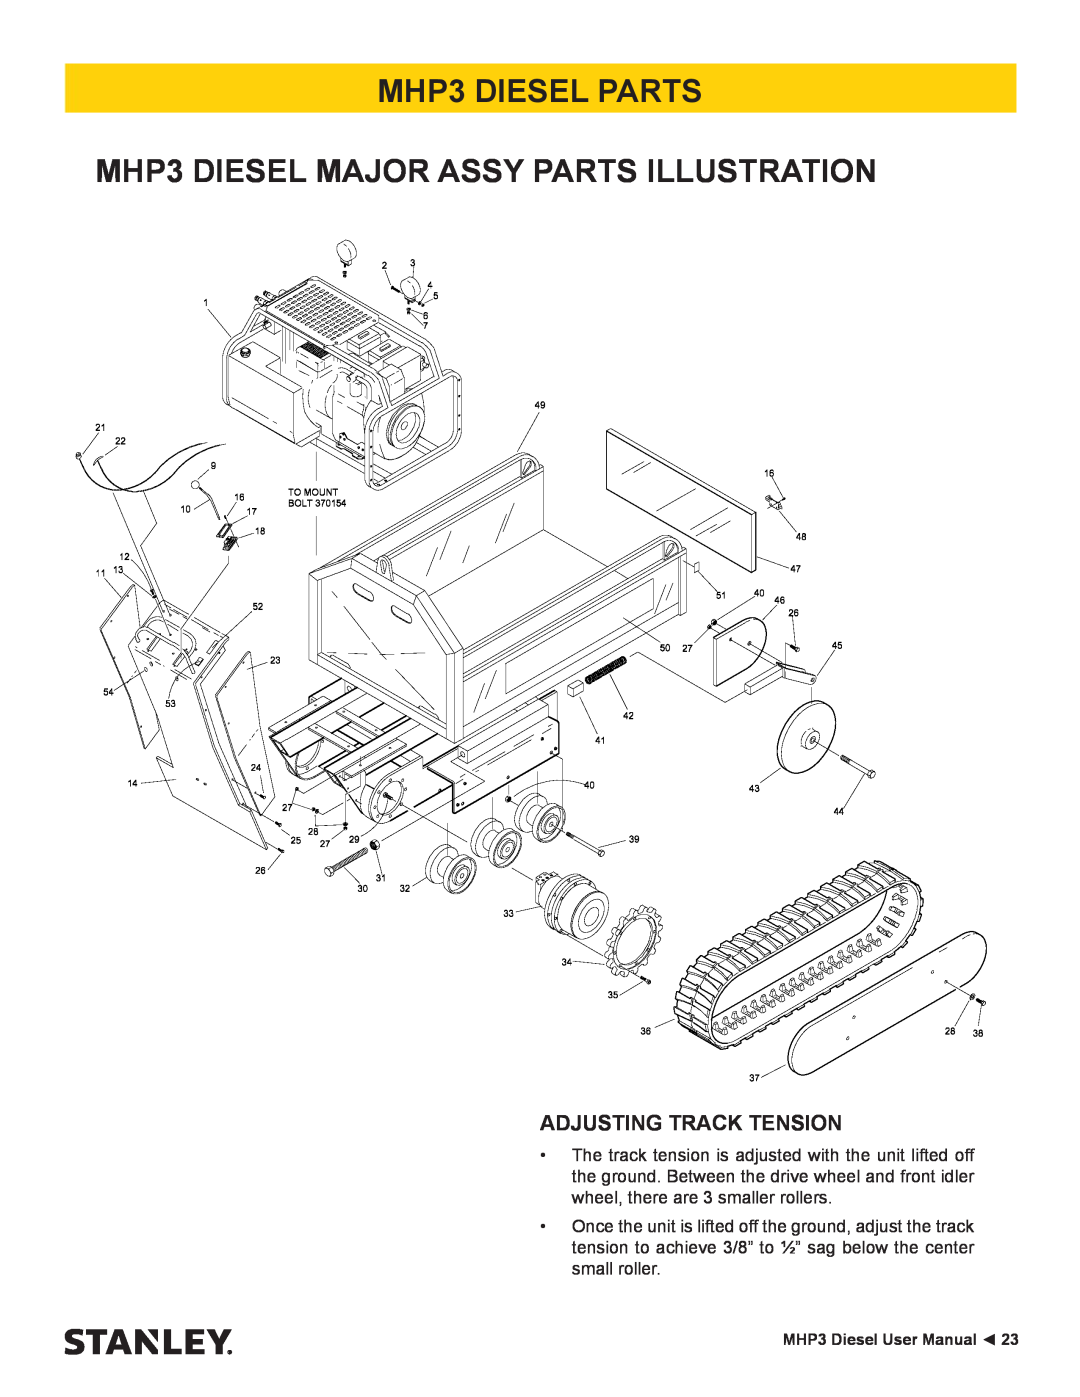 Stanley Black & Decker manual MHP3 DIESEL PARTS MHP3 DIESEL MAJOR ASSY PARTS ILLUSTRATION, Adjusting Track Tension 